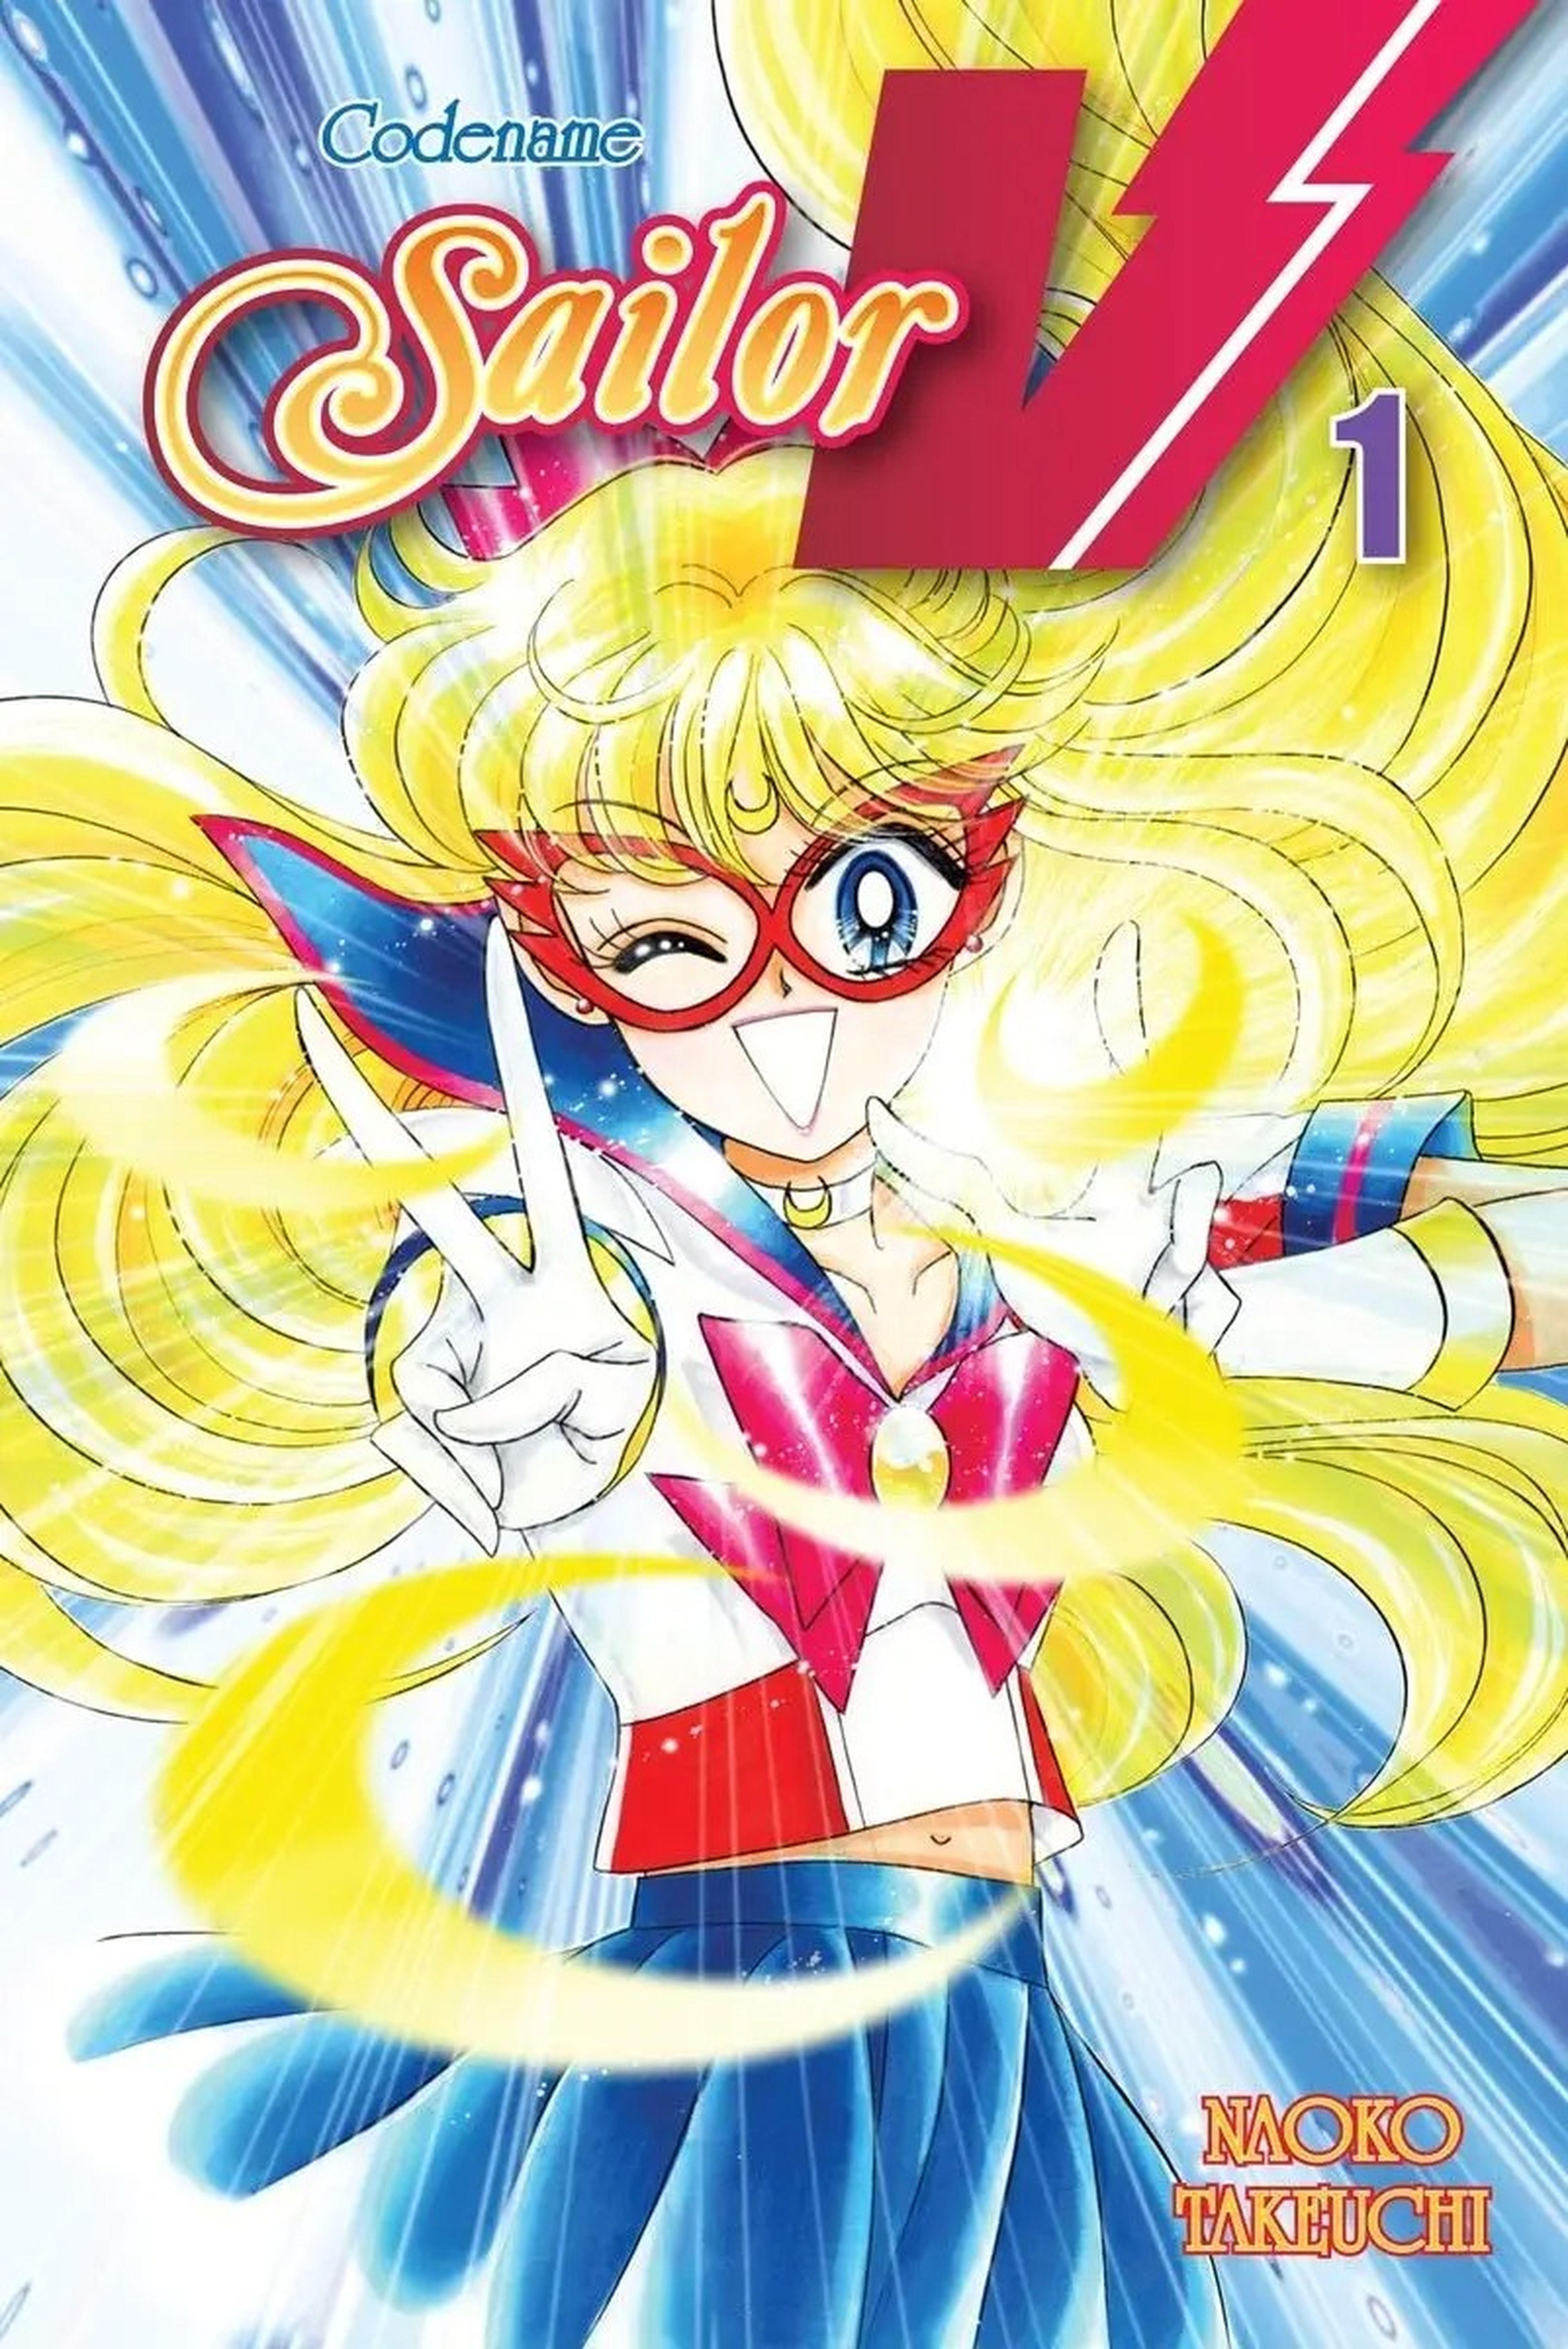 Portada del manga 'Codename: Sailor V', que inspiraría a su autora para crear 'Sailor Moon'.